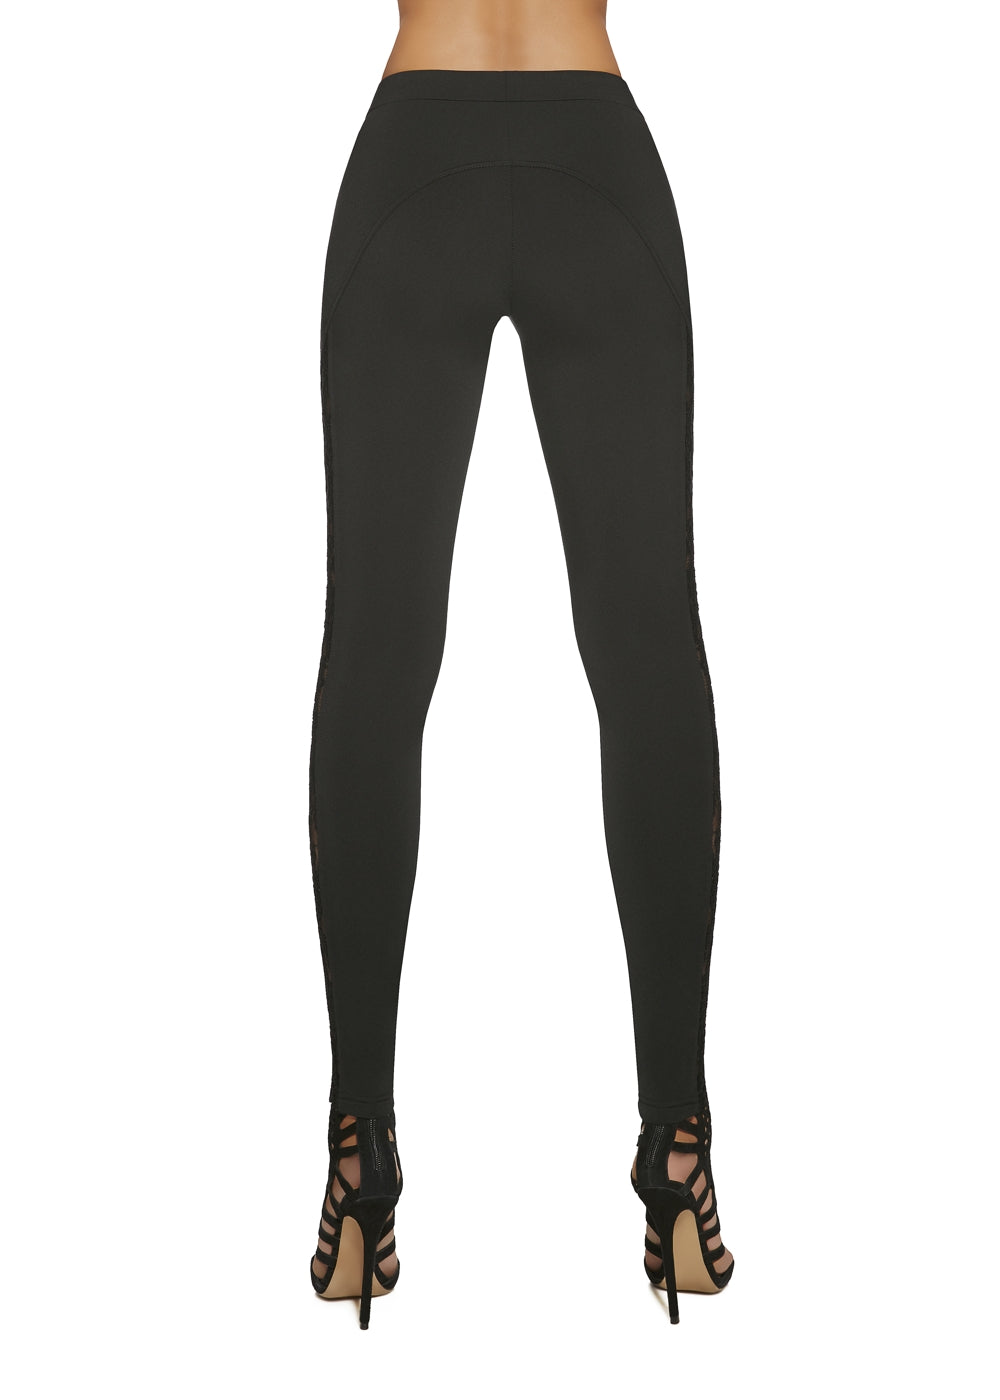 BasBleu Meloe Leggings - black fleece lined thermal leggings with a lace side panel stripe